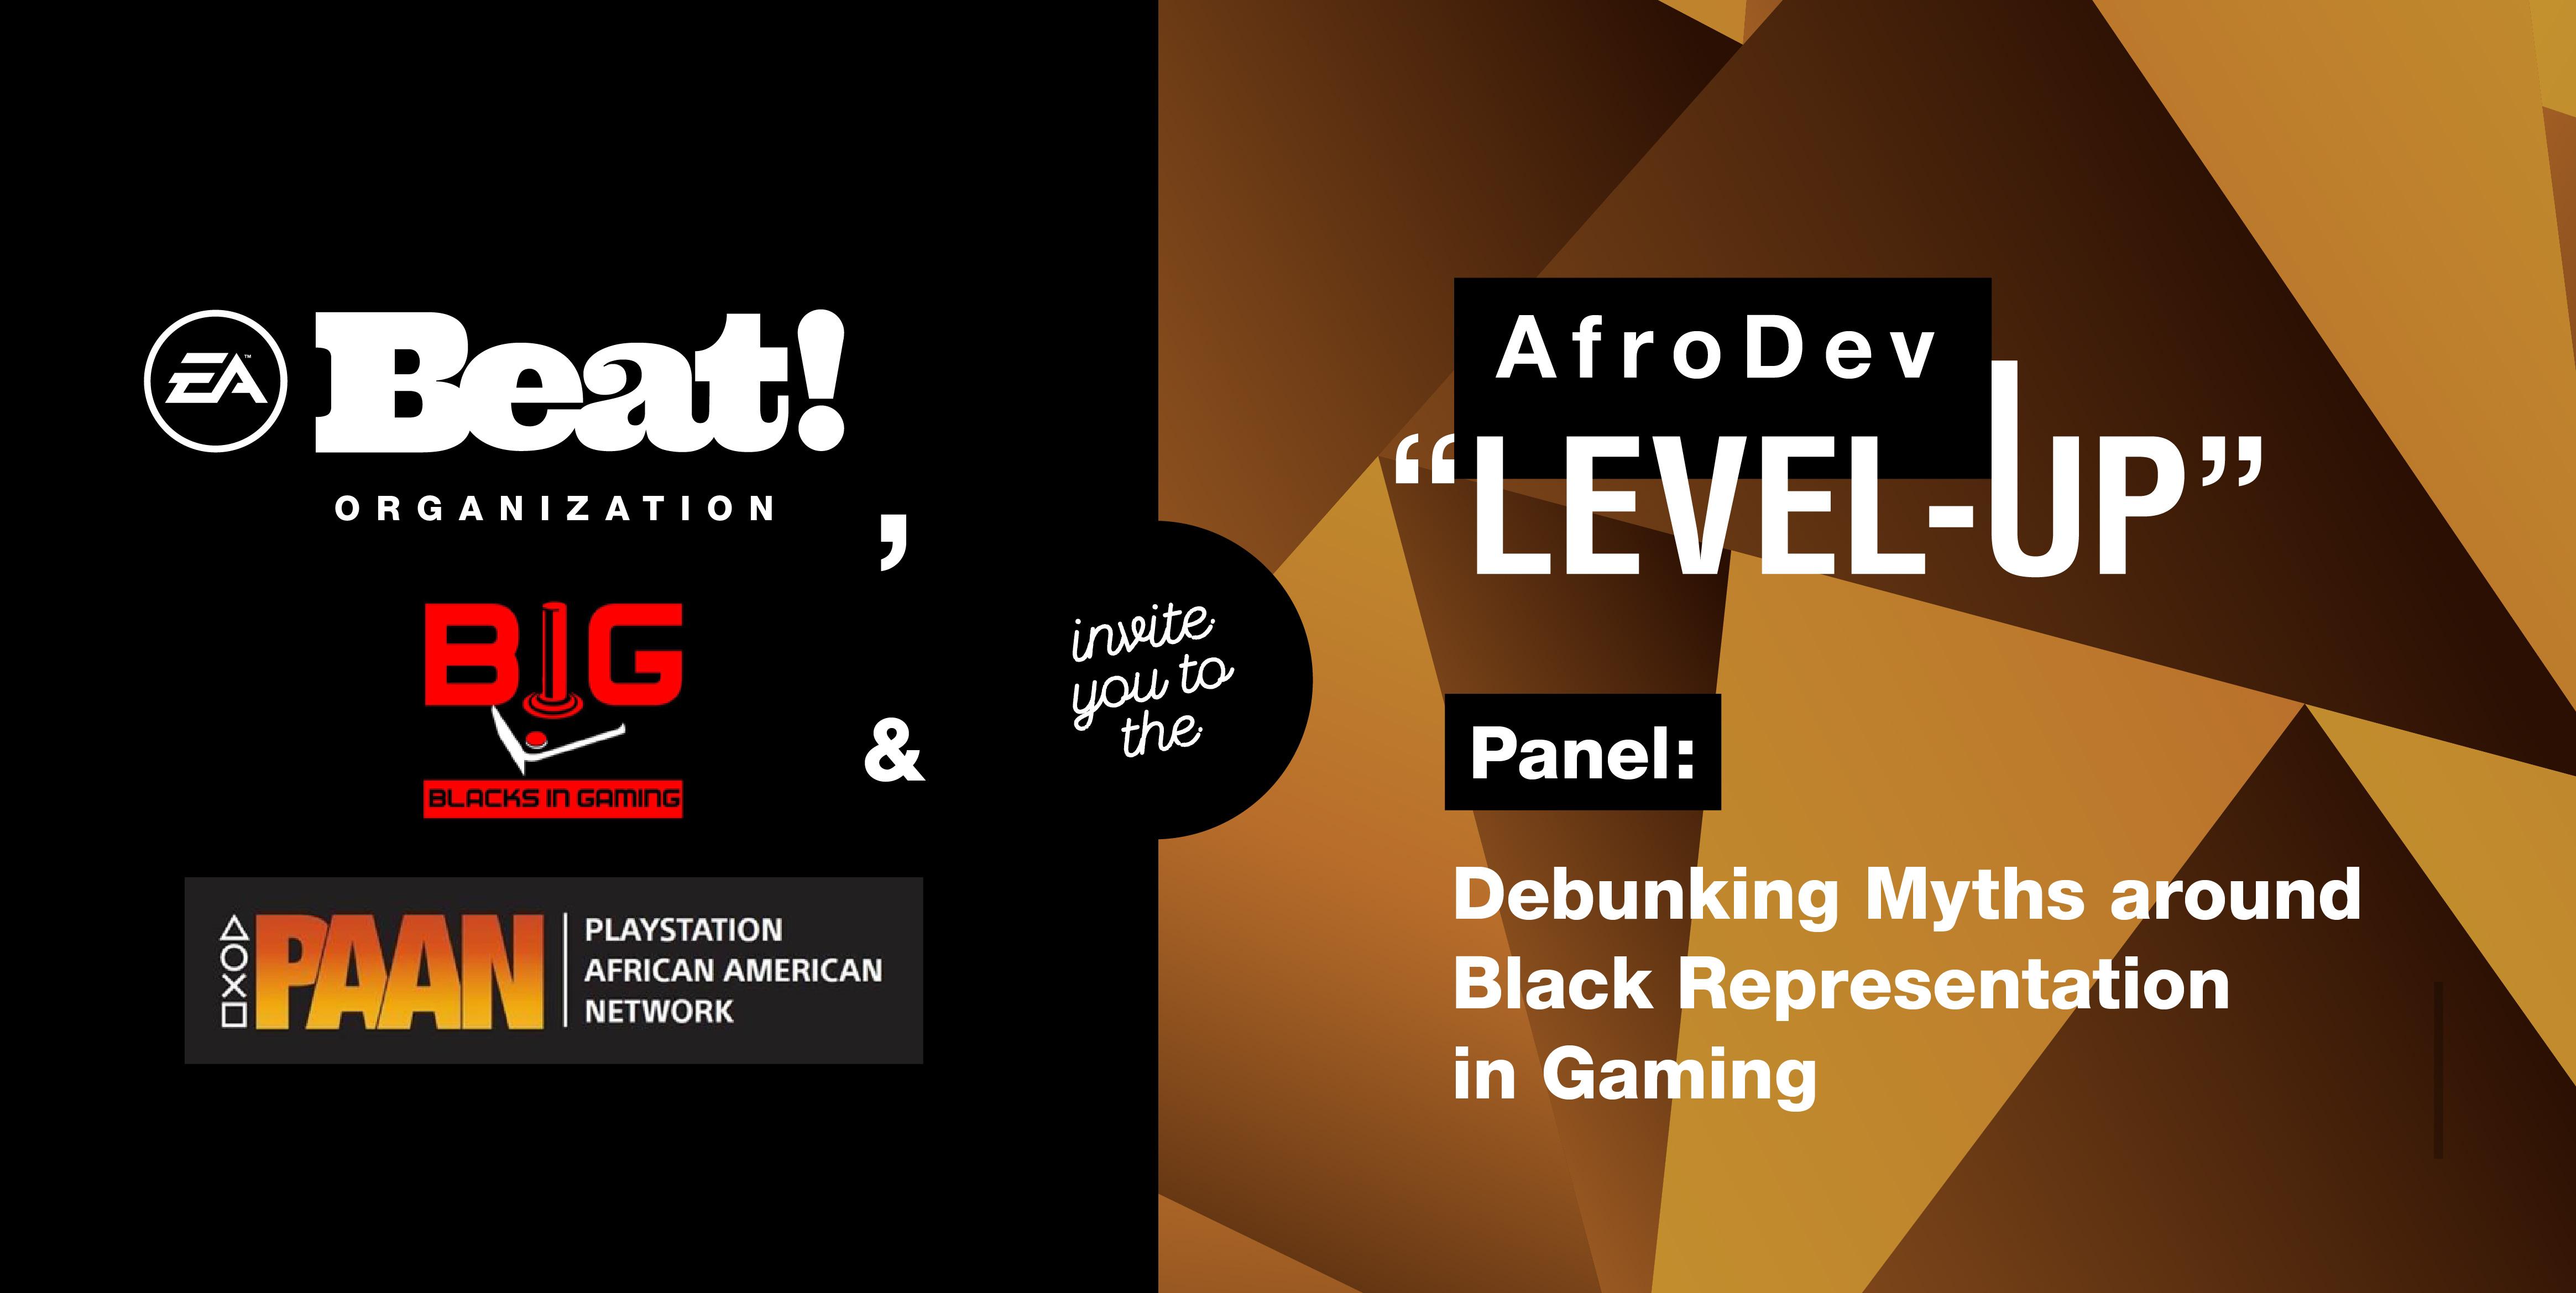 AfroDev “Level-Up” Panel: Debunking Myths around Black Representation in Gaming @ GDC 